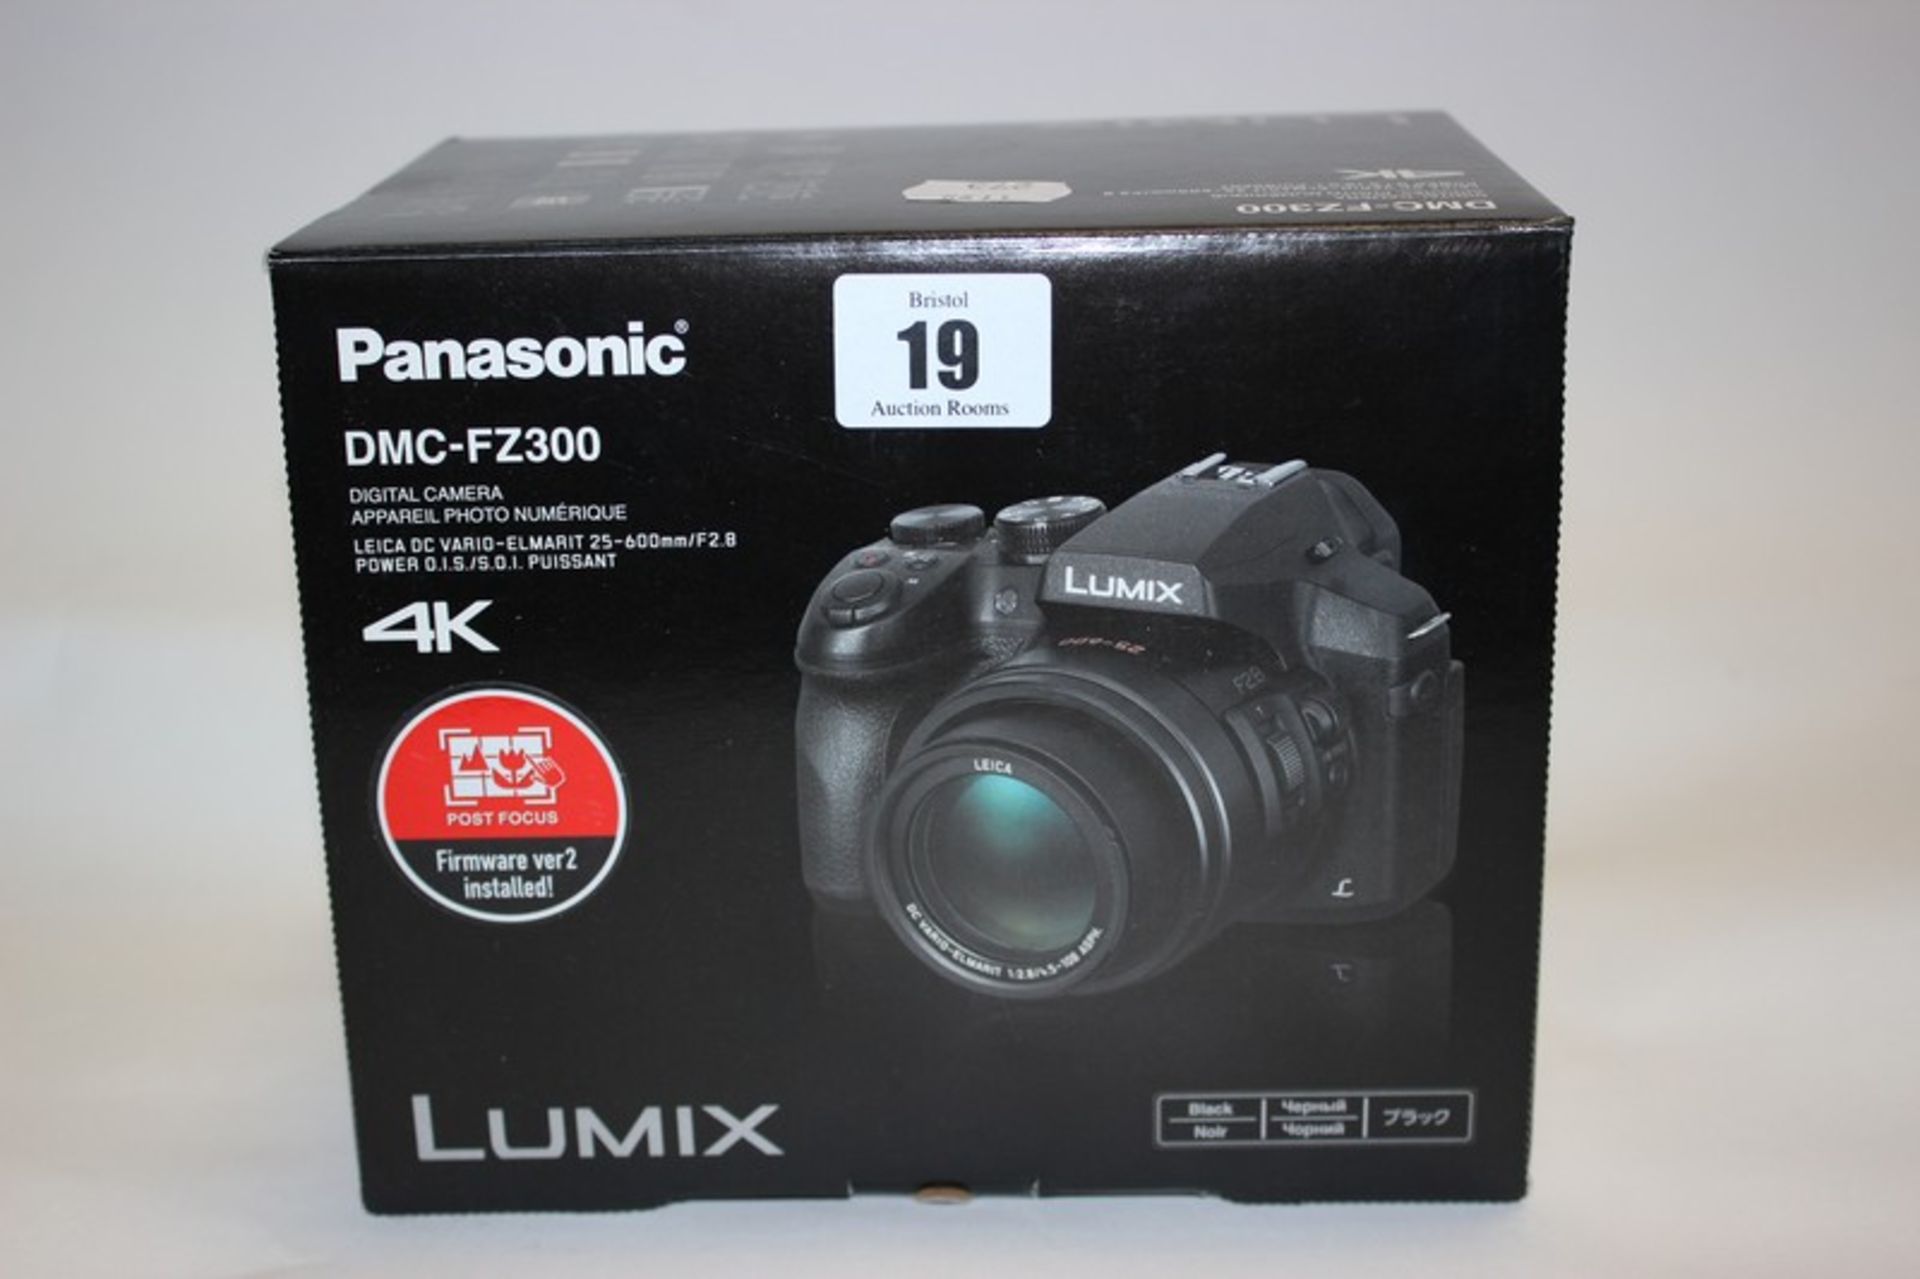 A Panasonic Lumix DMC-FZ300 digital camera (Boxed as new).